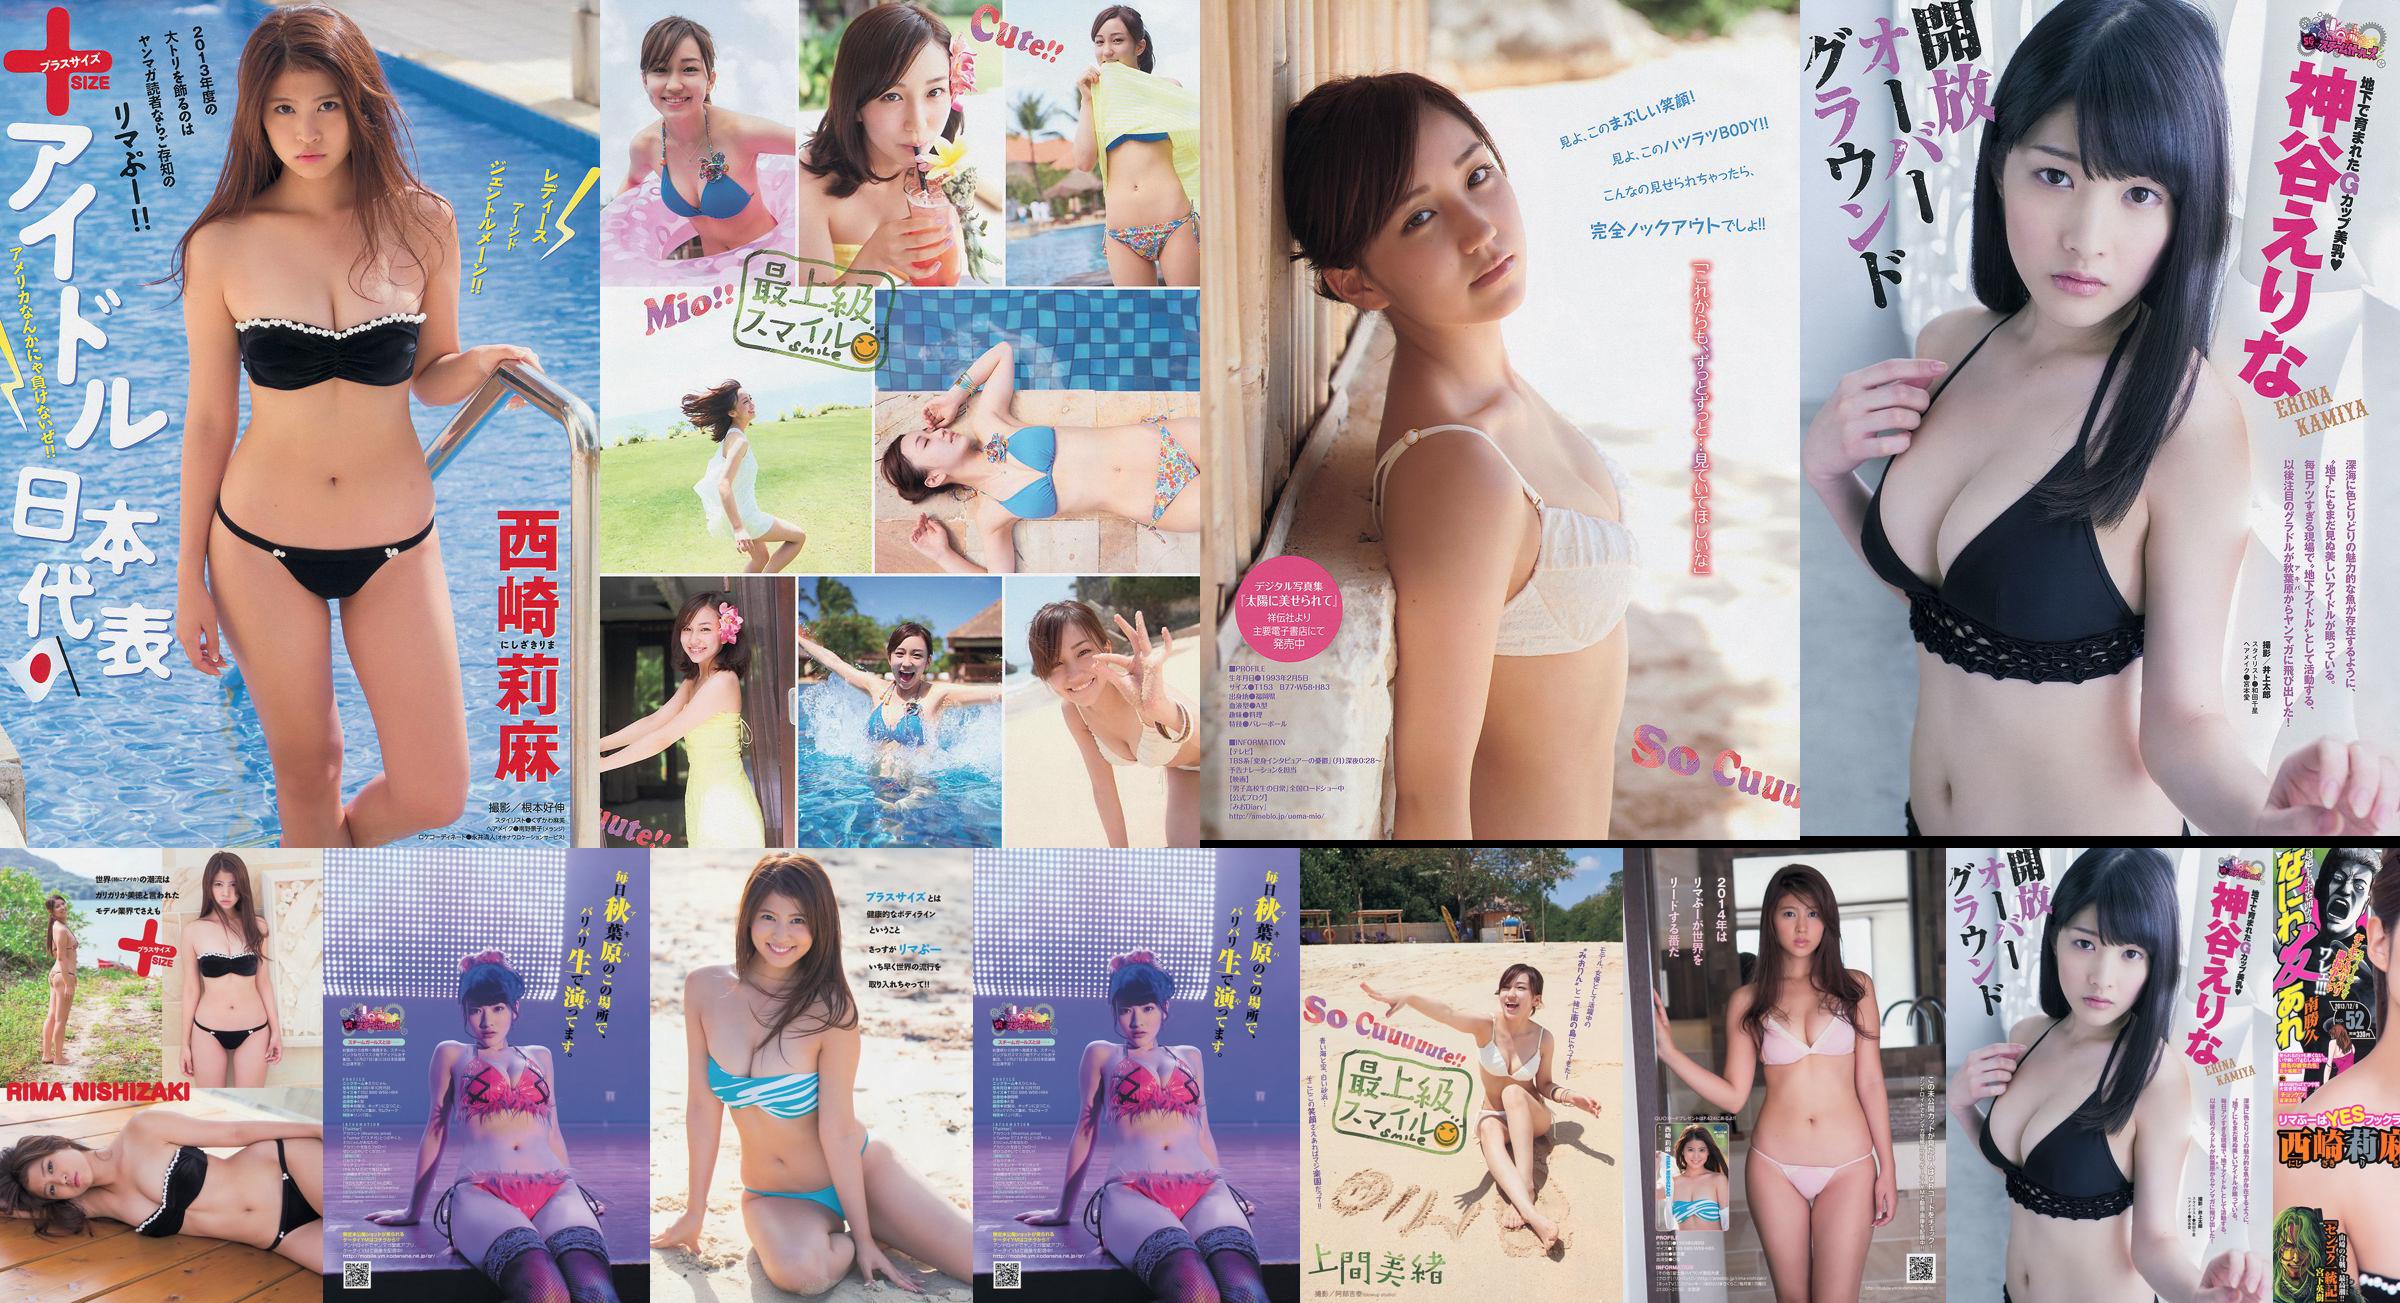 [Tạp chí trẻ] Rima Nishizaki Mio Uema Erina Kamiya 2013 Ảnh số 52 Moshi No.5ba24a Trang 4